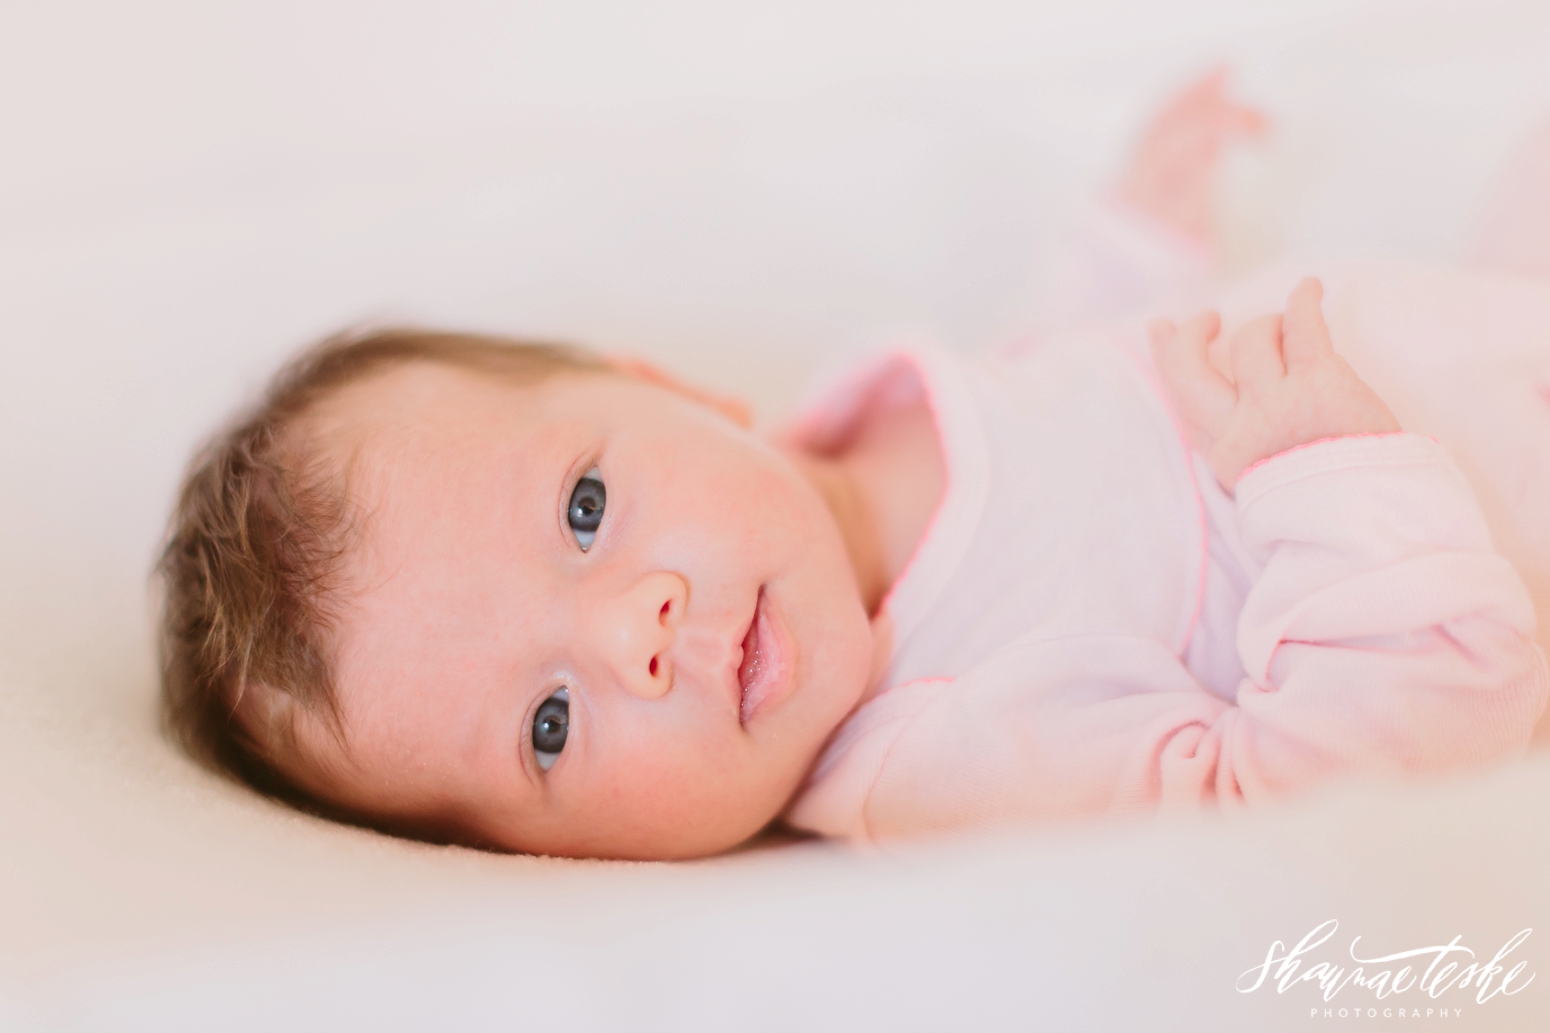 shaunae_teske_wisconsin_photographer_at-home-newborn-session-wisconsin-kathryn-78